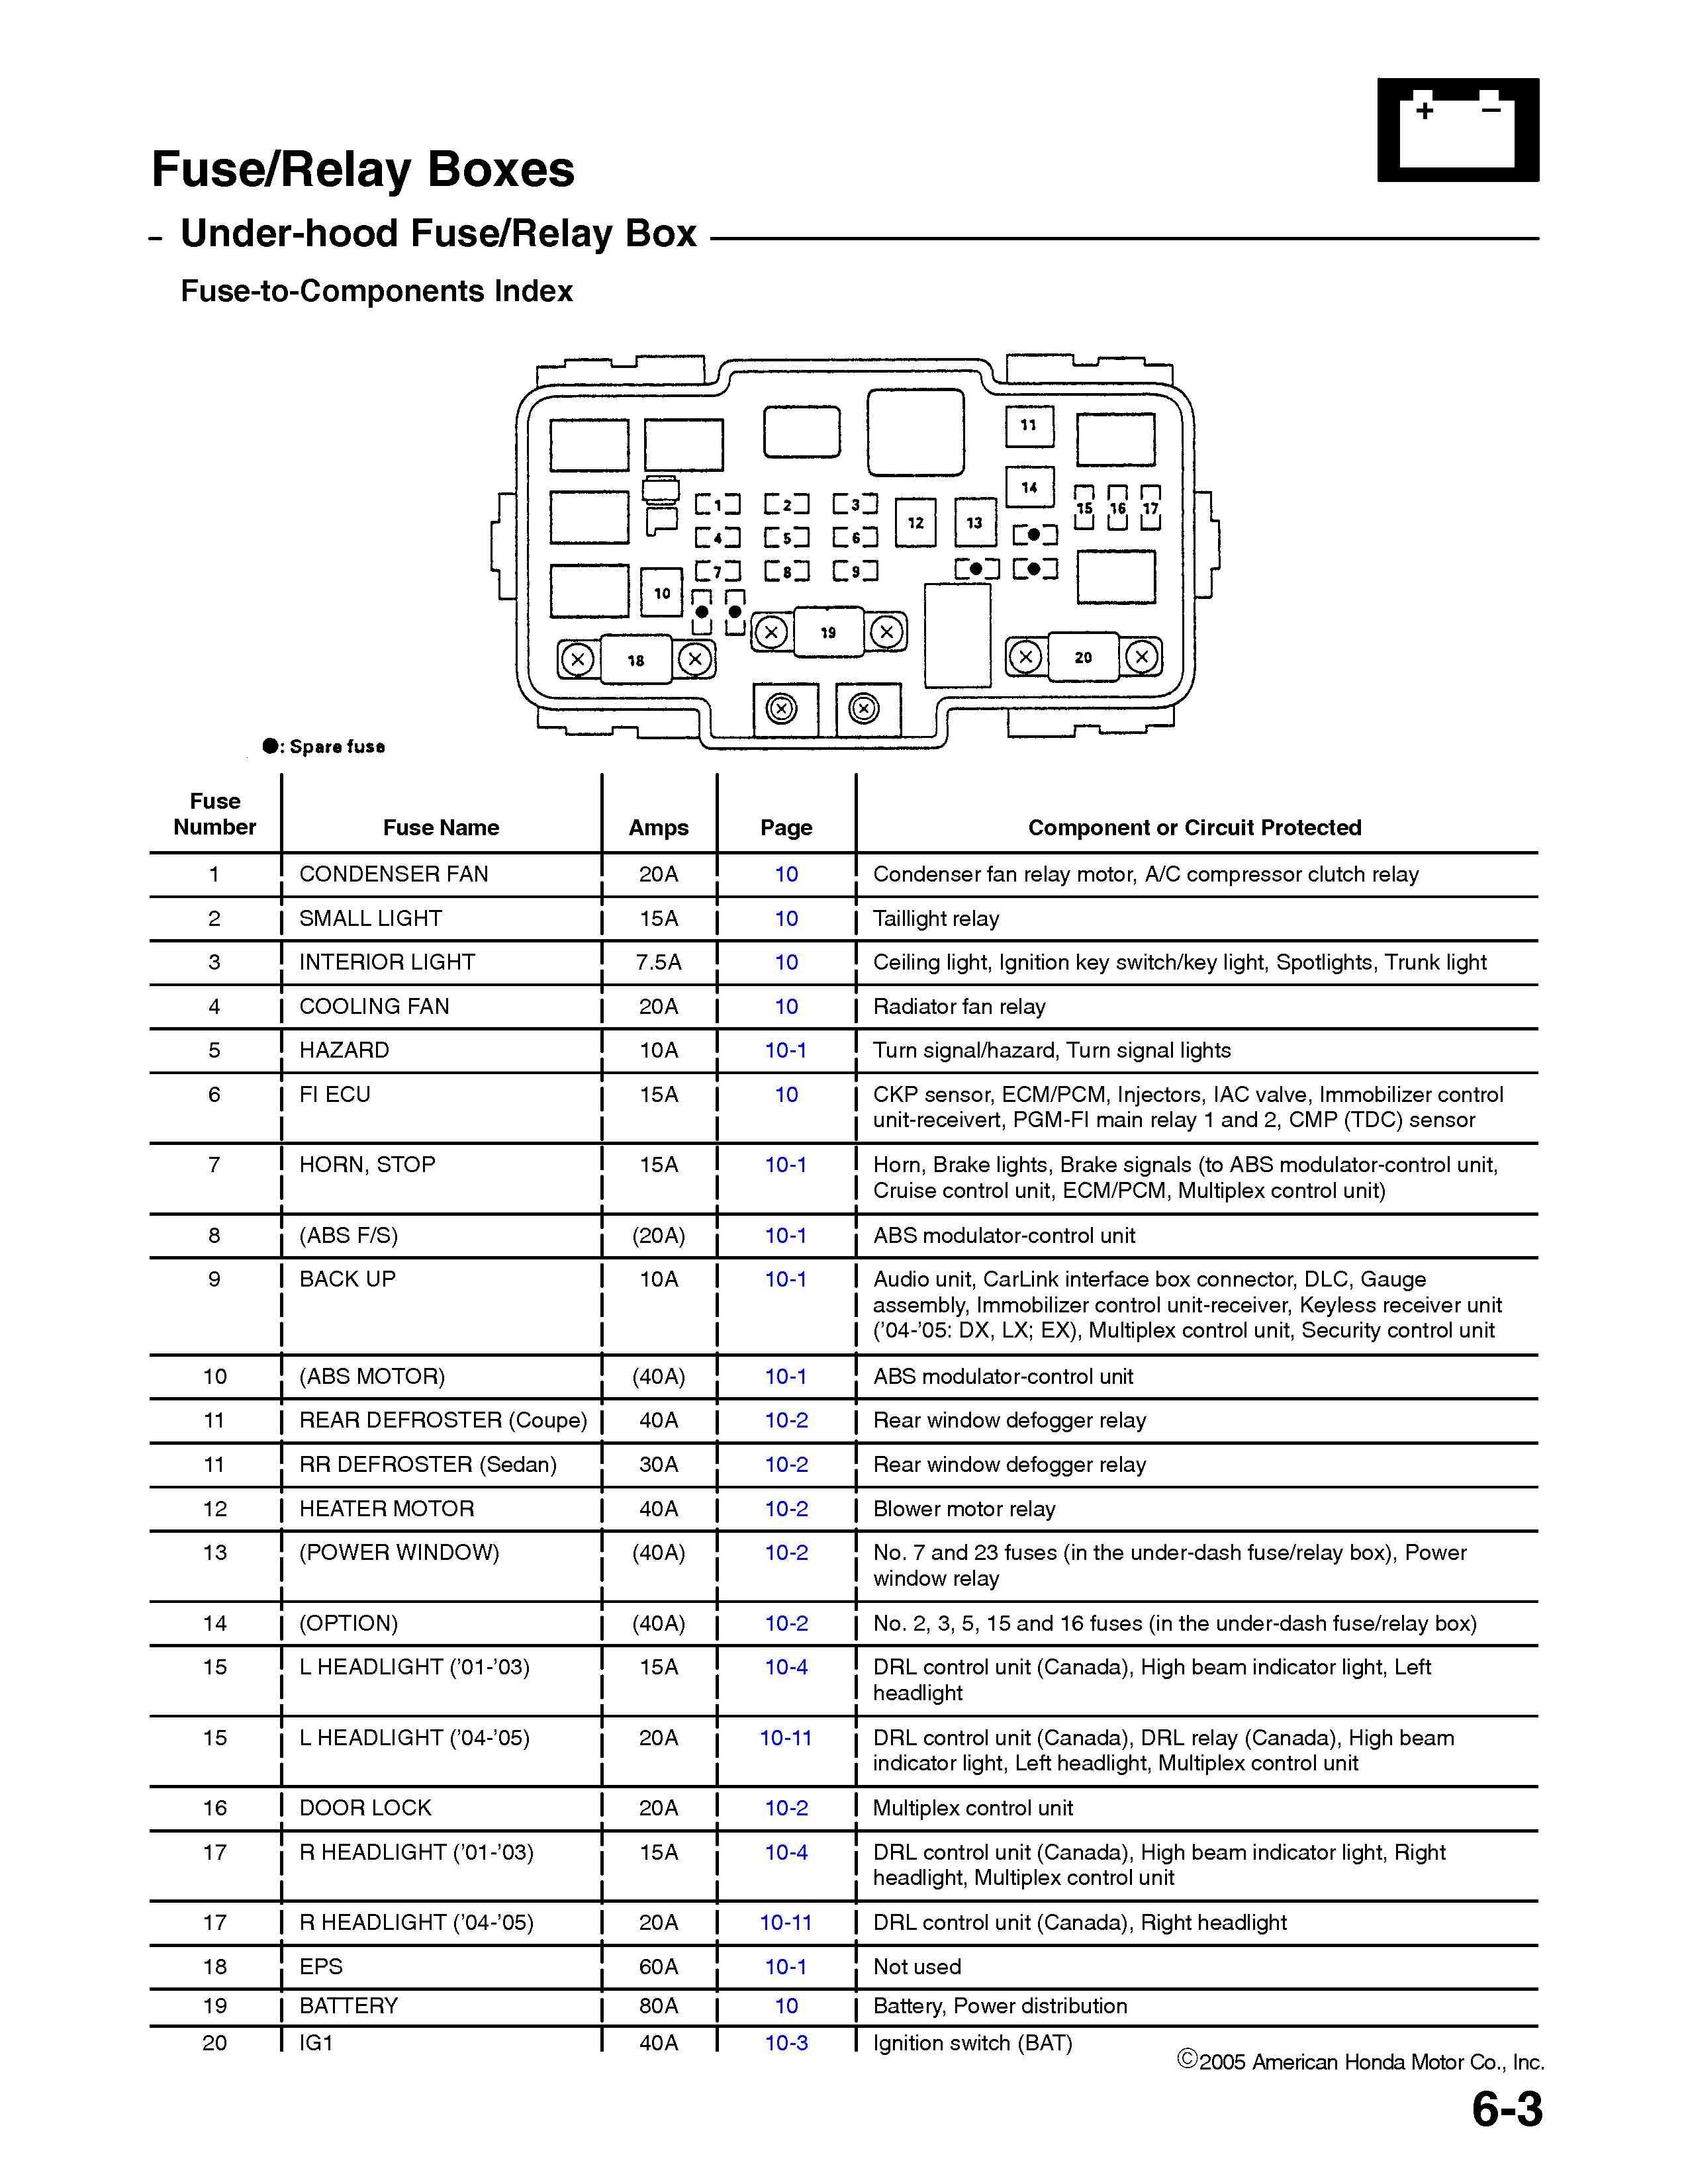 Honda Civic Engine Diagram Honda Civic Fuse Box Diagram Graphic Facile Snapshot More 05 06 04